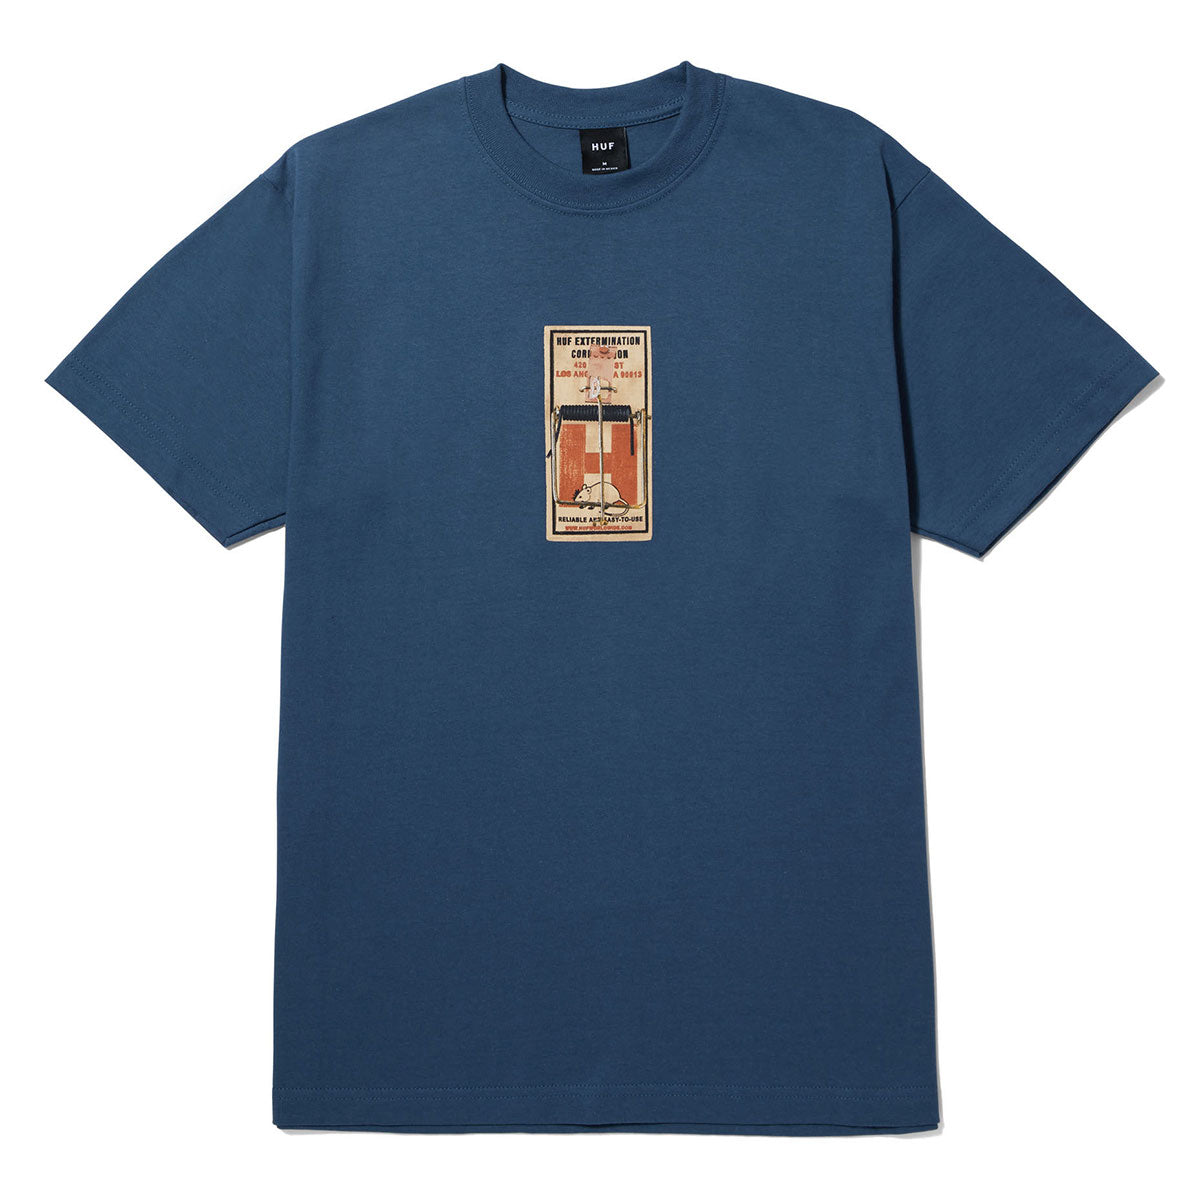 HUF Rat Race T-Shirt - Slate Blue image 1